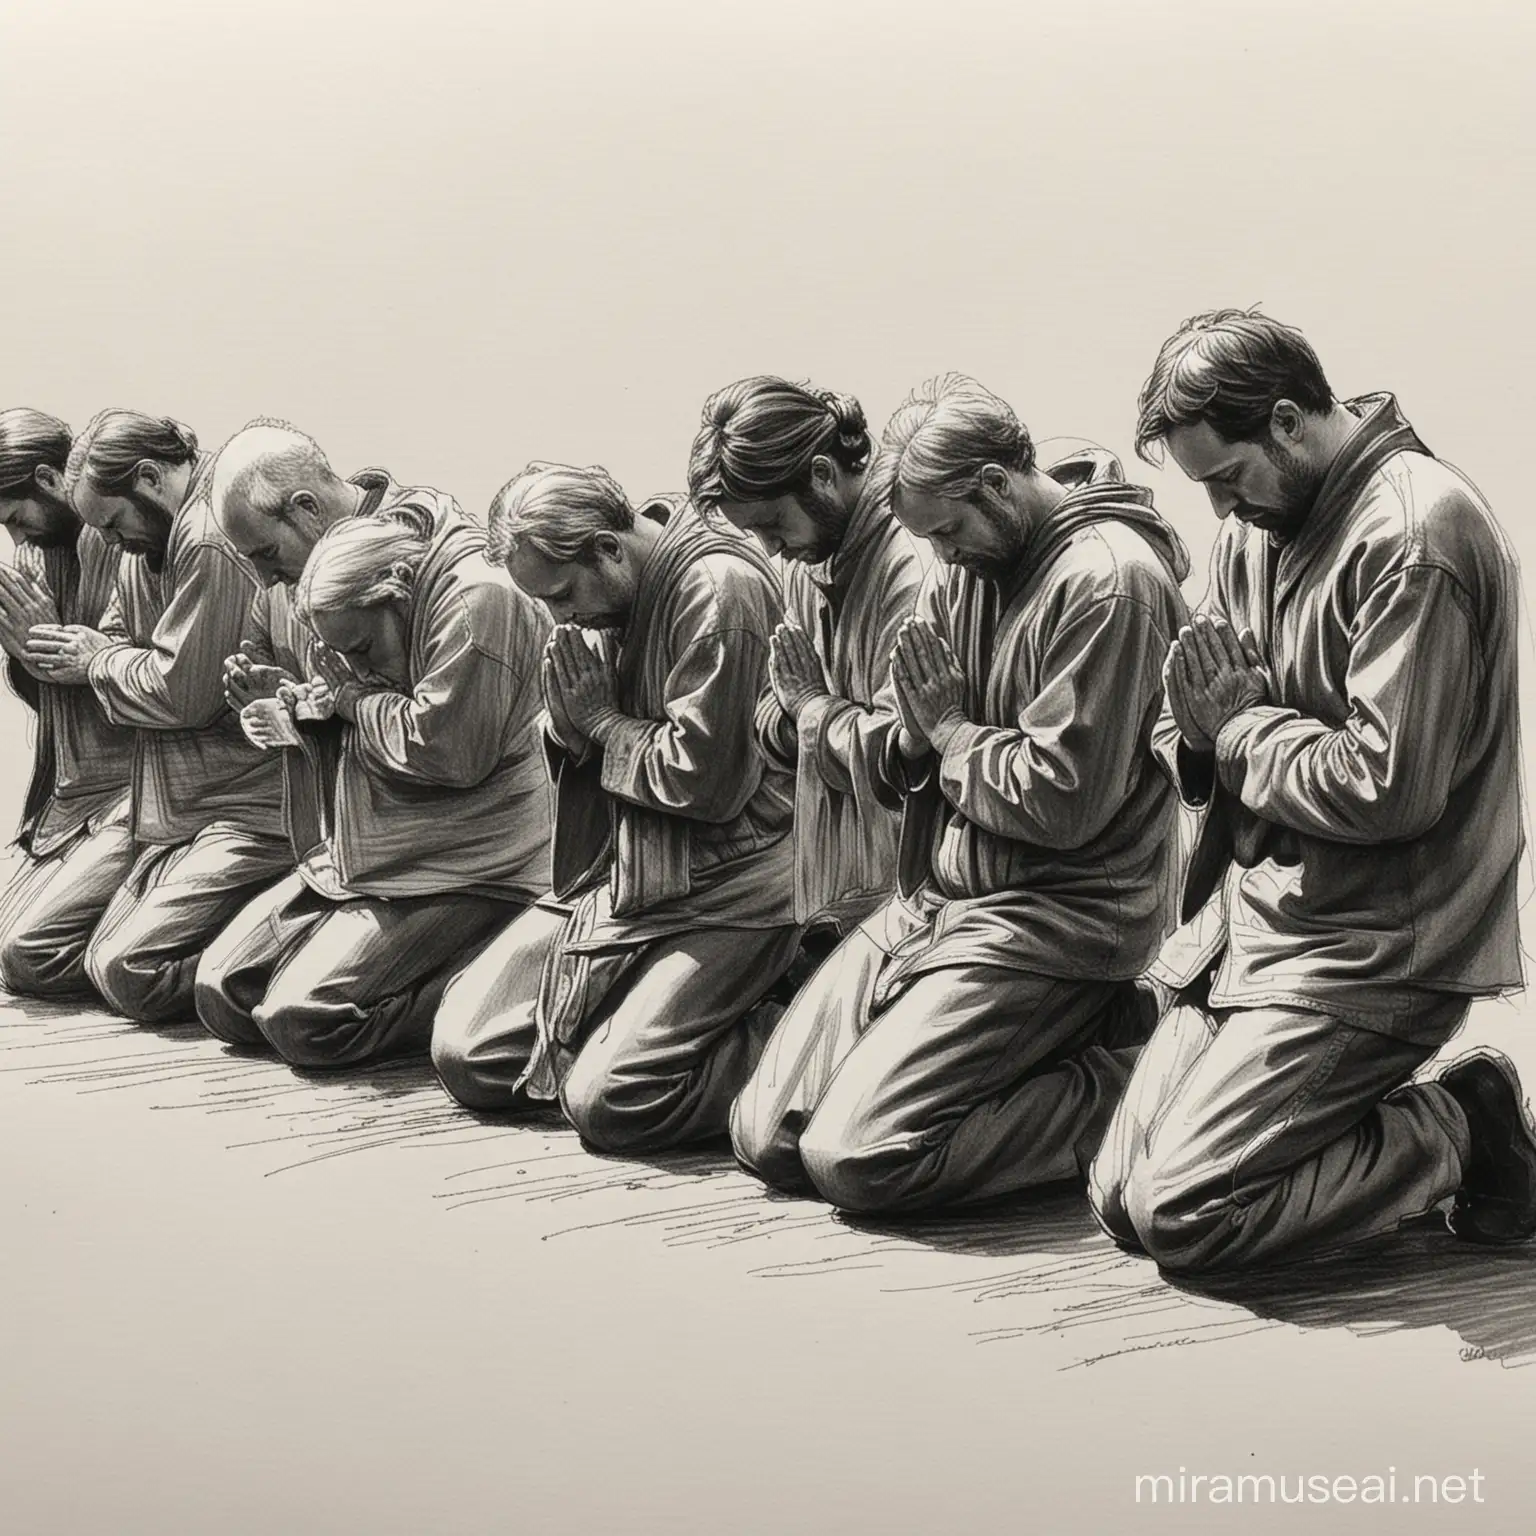 Monochrome Sketch of Devout Individuals Praying